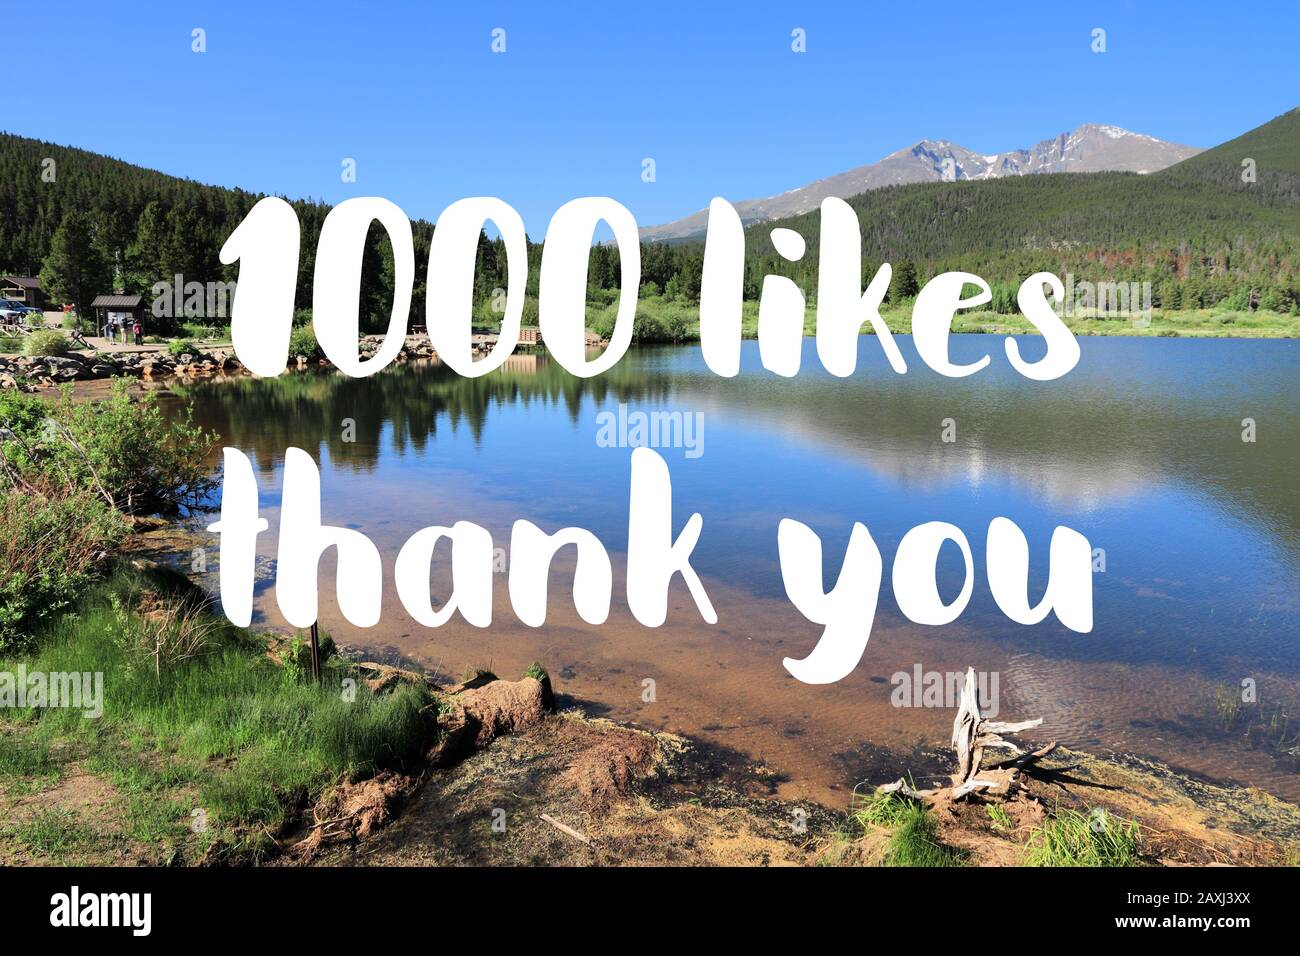 1000 likes. Social media achievement. Thank you sign. Stock Photo